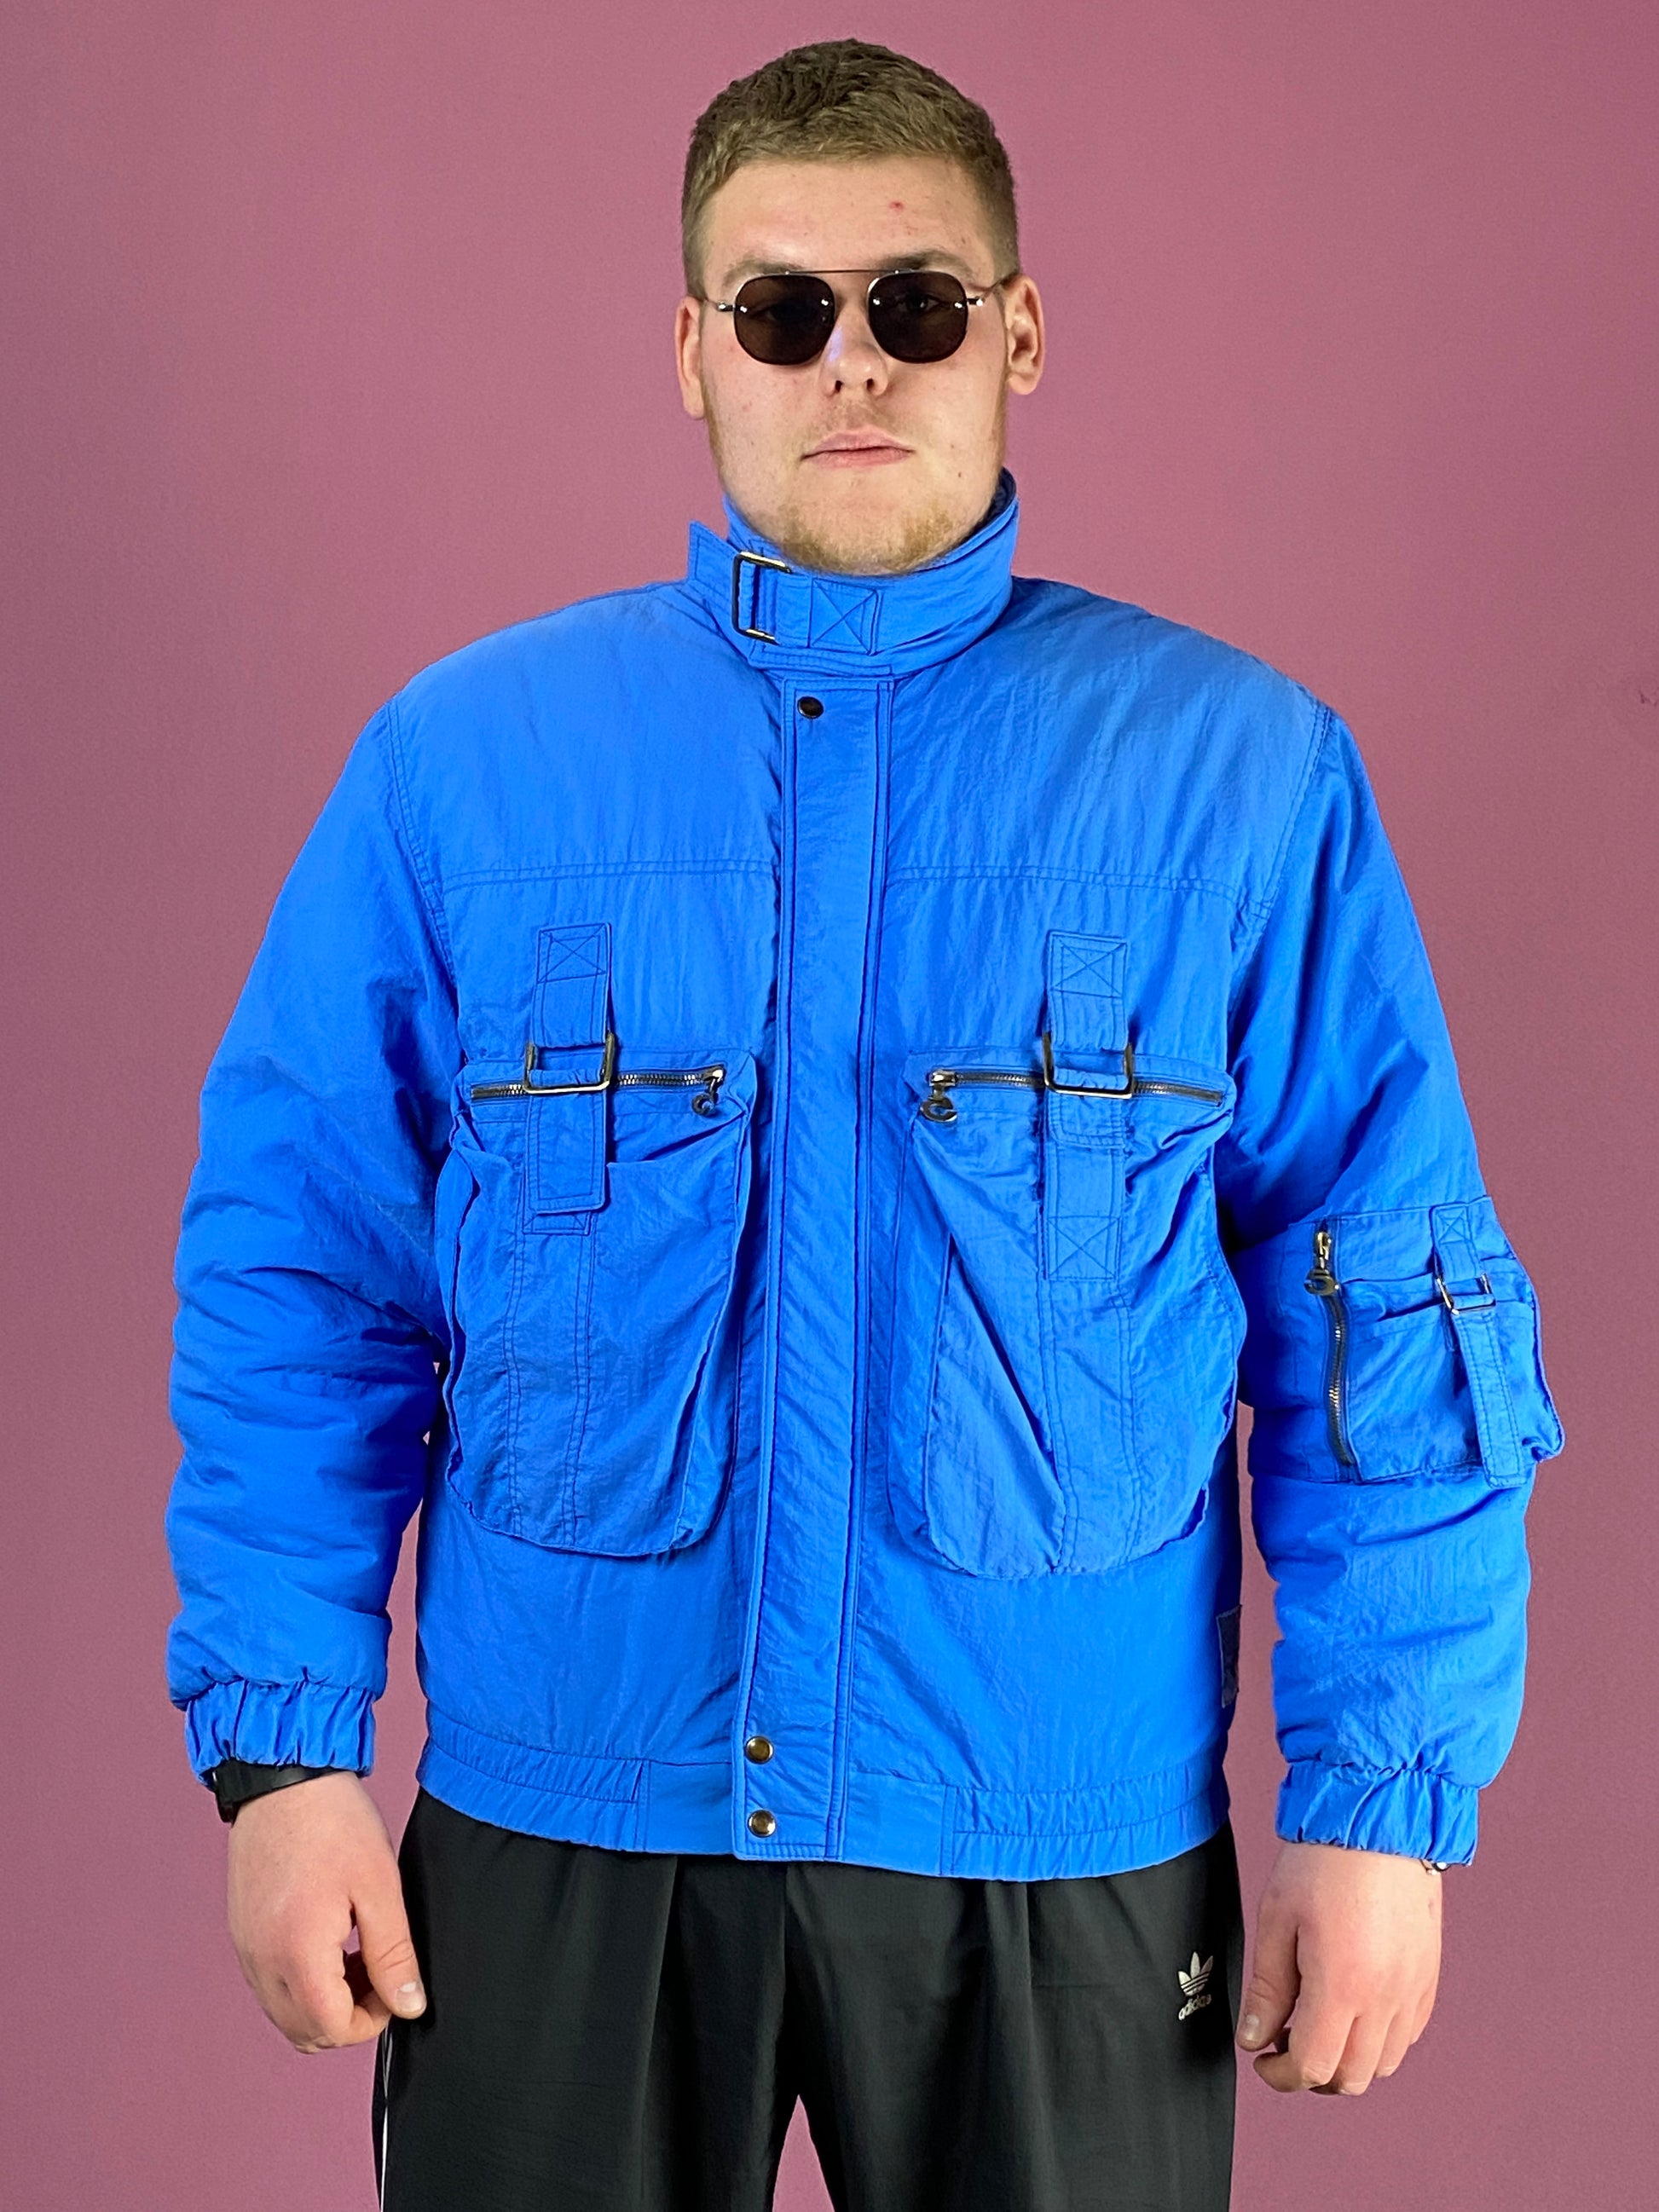 90s 5 Avenue Vintage Men's Ski Jacket - Large Blue Nylon